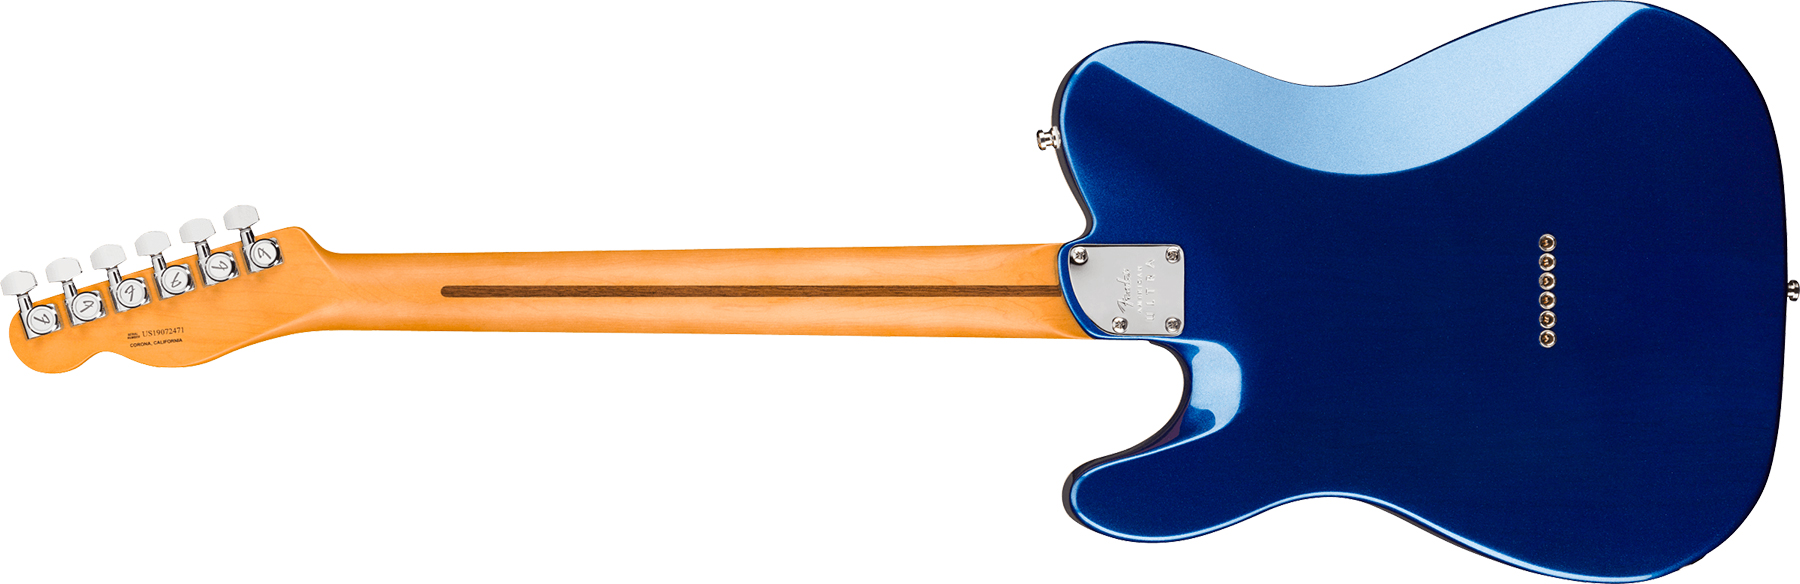 Fender Tele American Ultra 2019 Usa Mn - Cobra Blue - Guitarra eléctrica con forma de tel - Variation 1